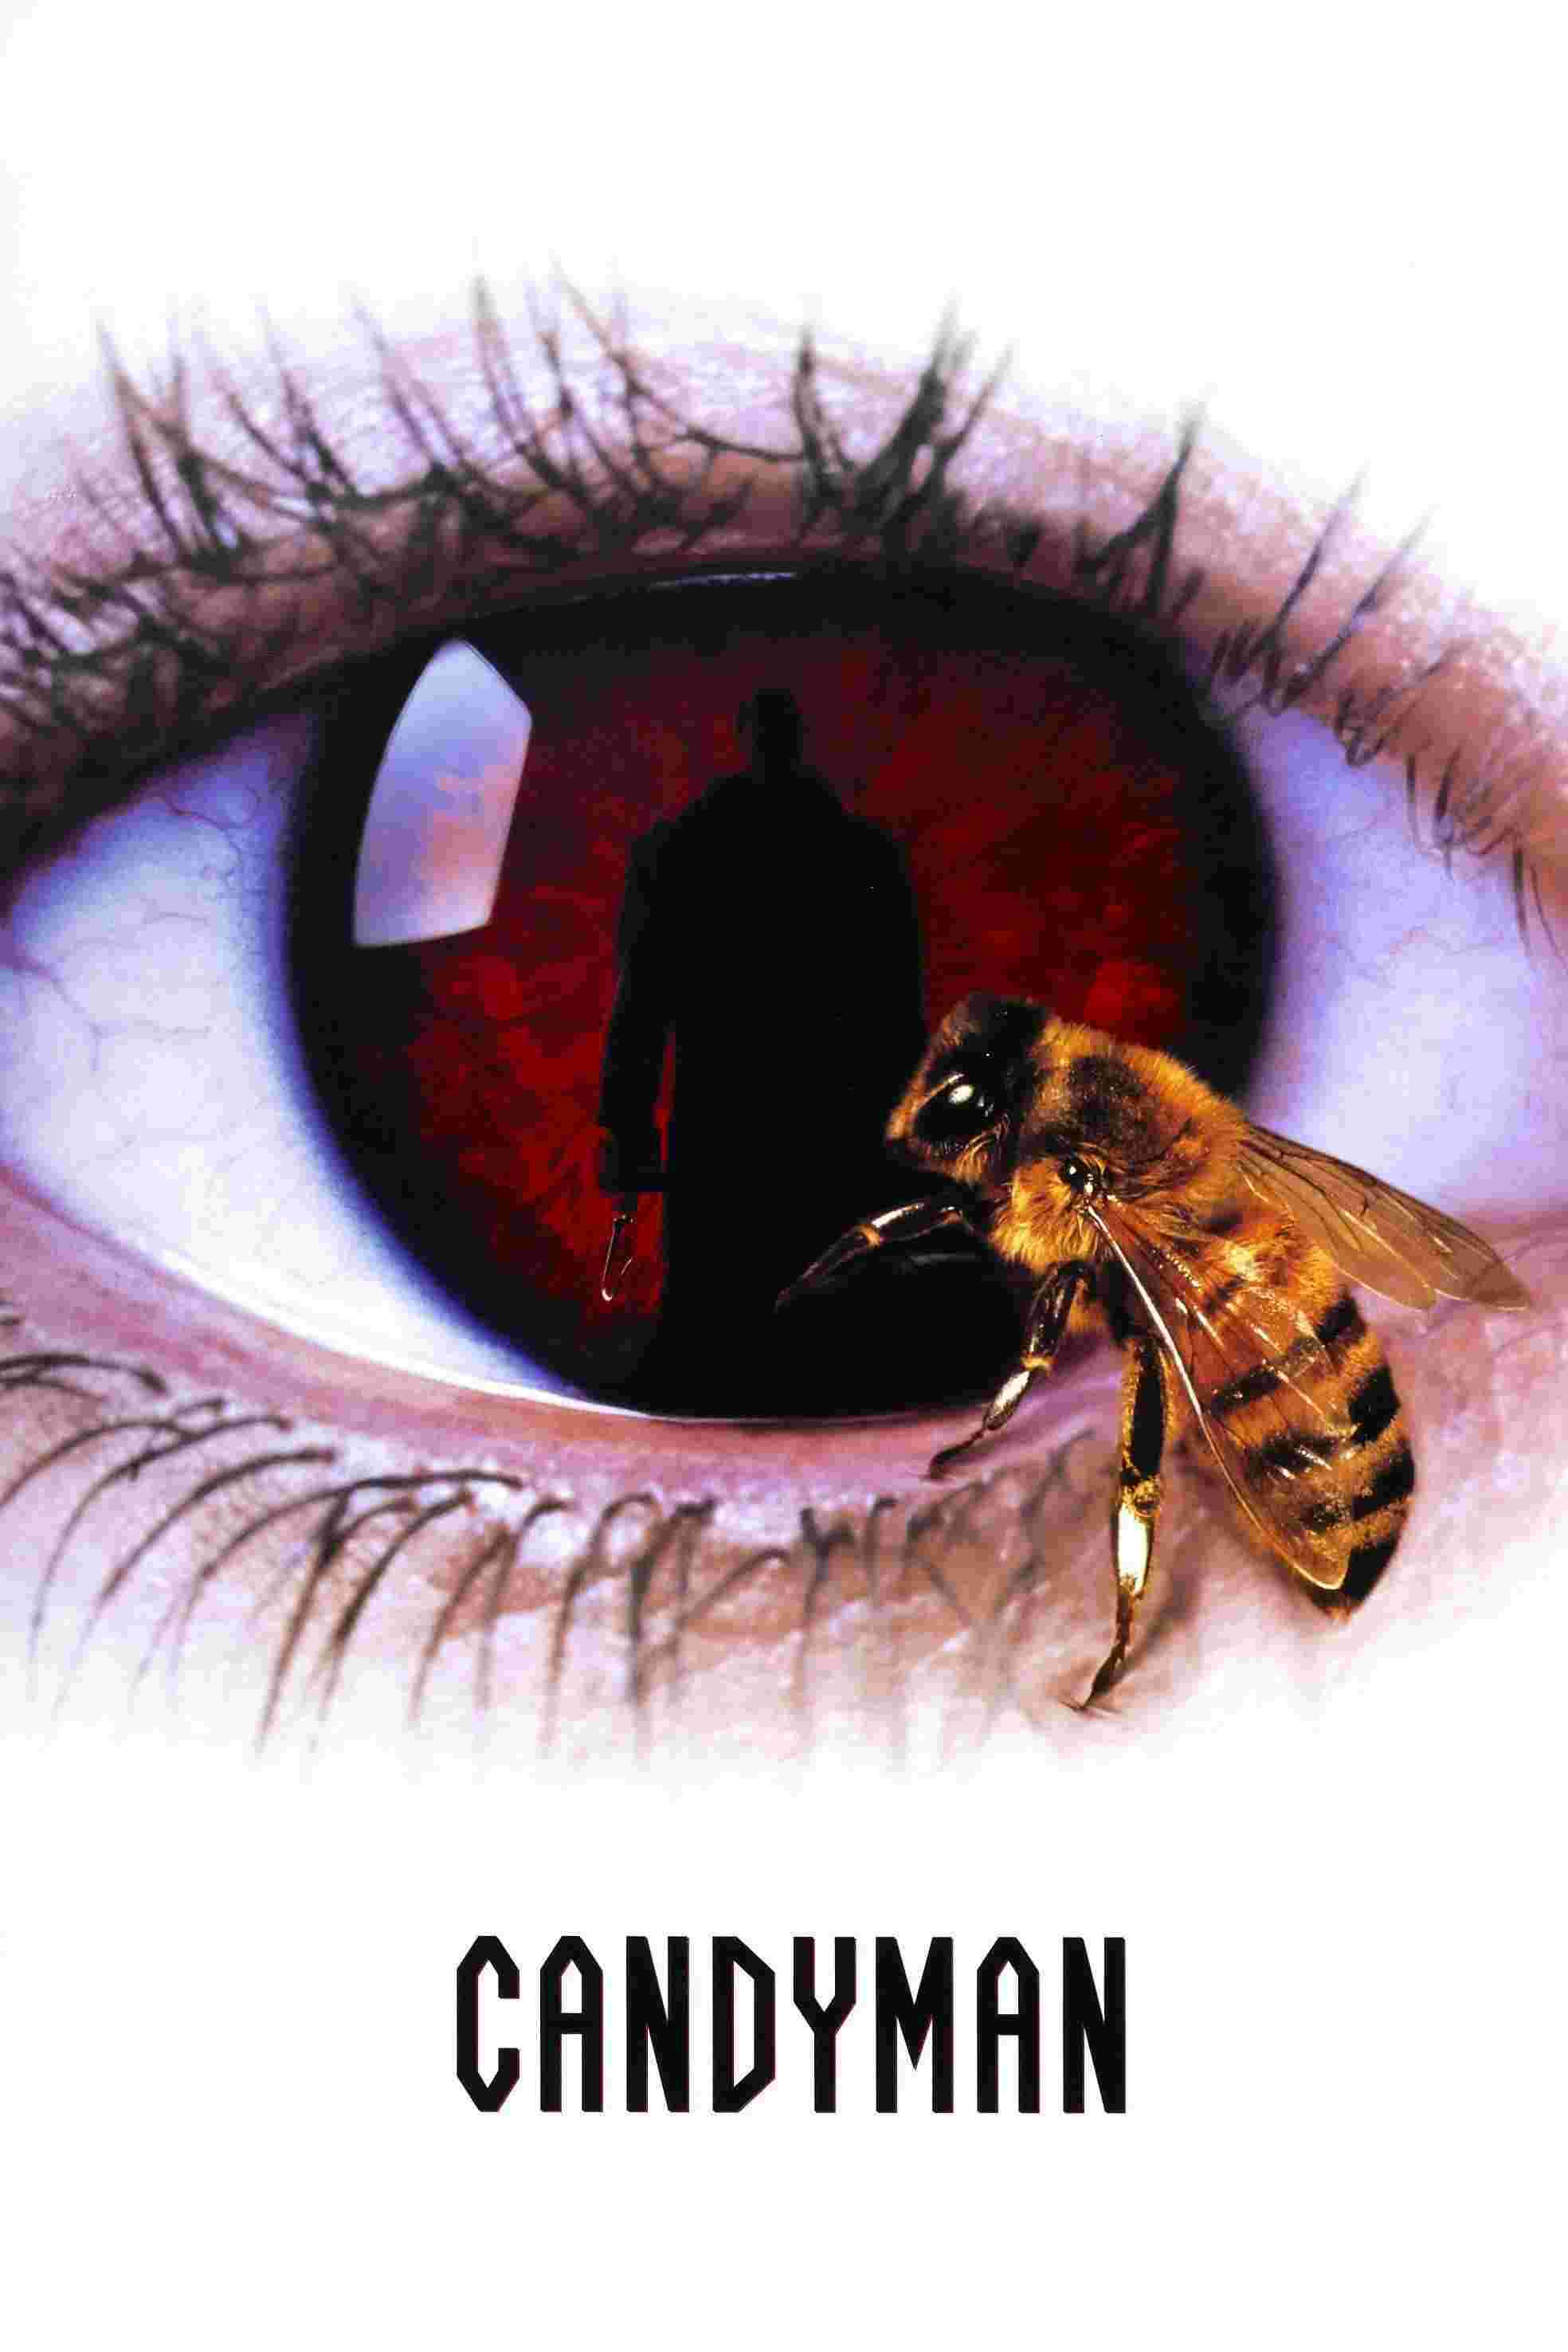 Candyman (1992) Virginia Madsen